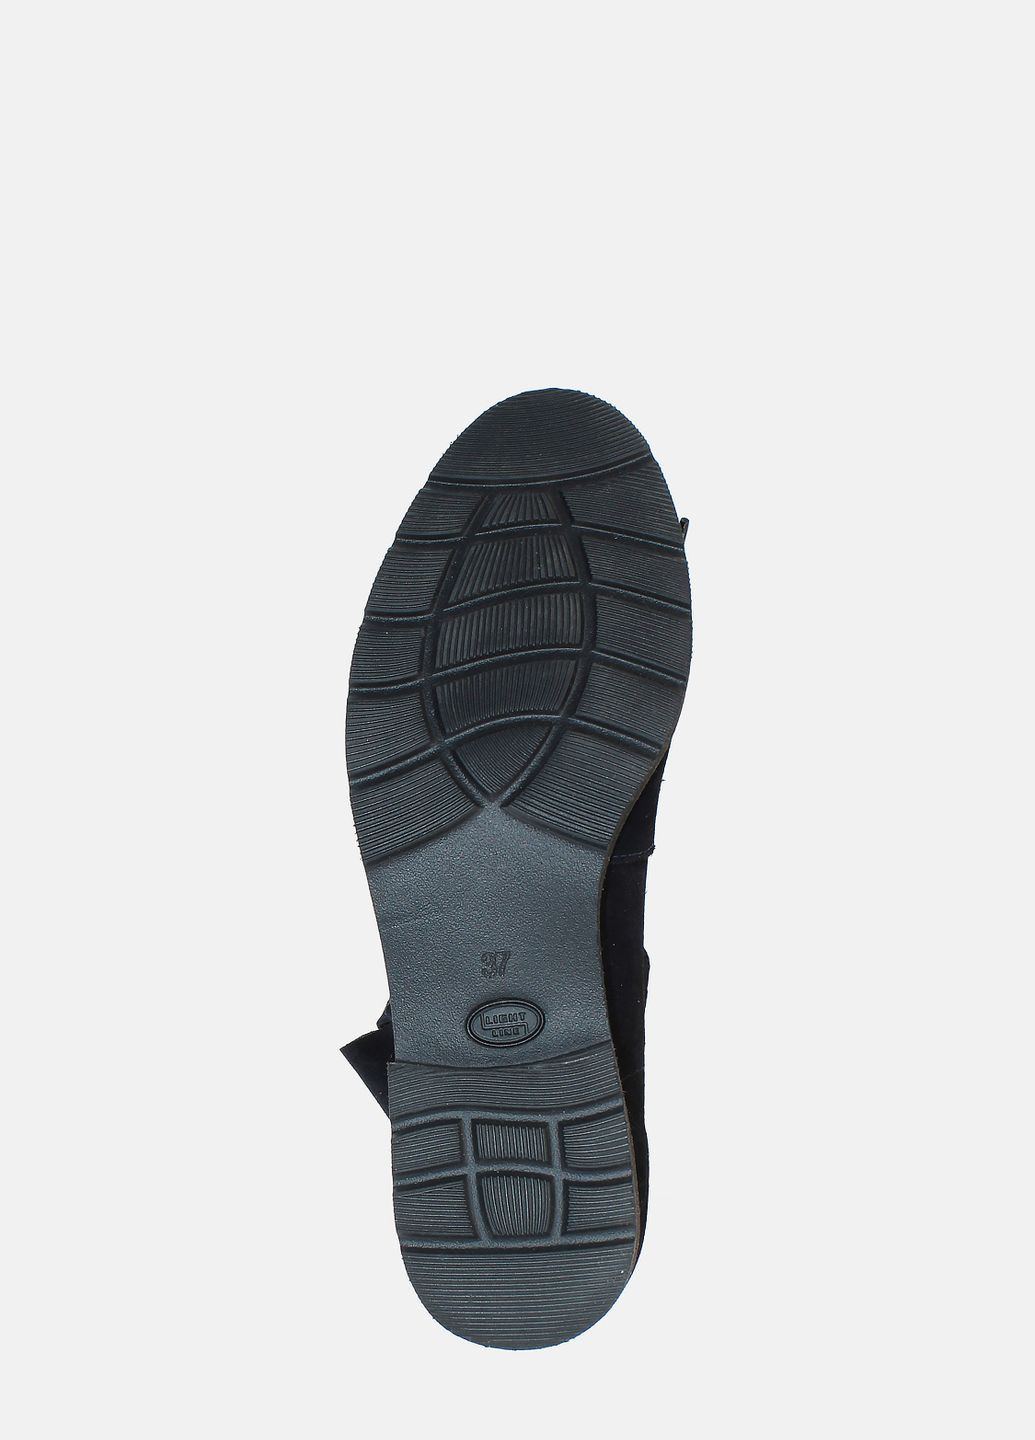 Осенние ботинки black&white rbw0550-11 темно-синий Black & White из натуральной замши